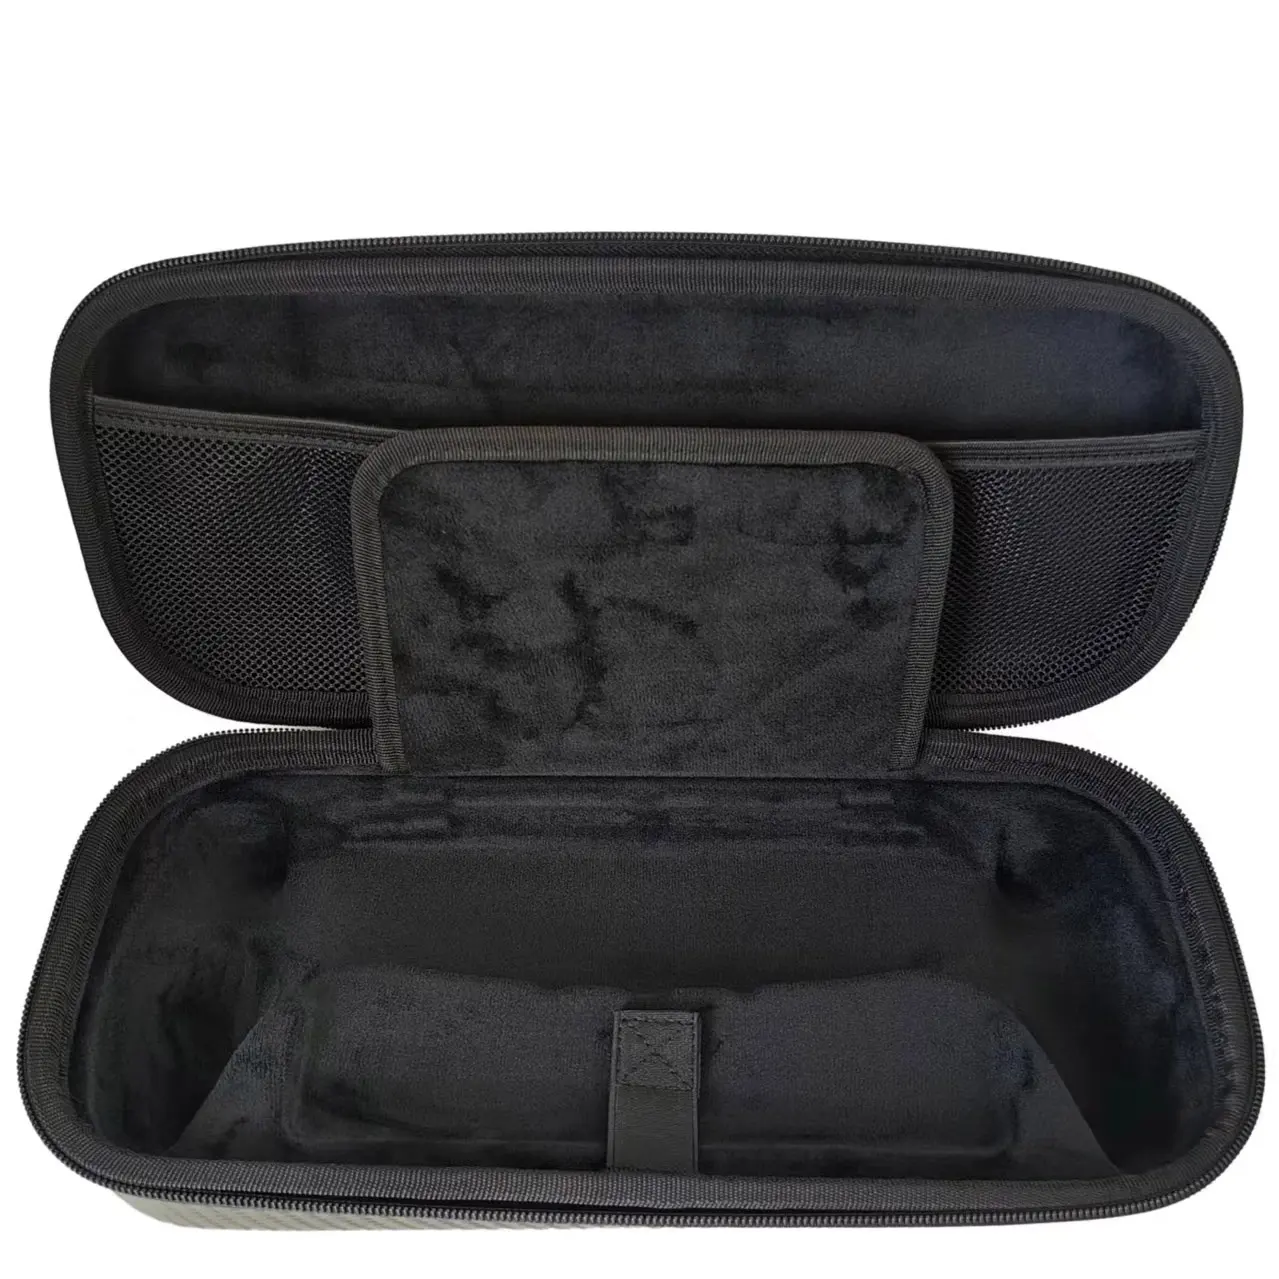 EVA Hard Carrying Case for PS5 Portal Portable Case Bag for PlayStation 5